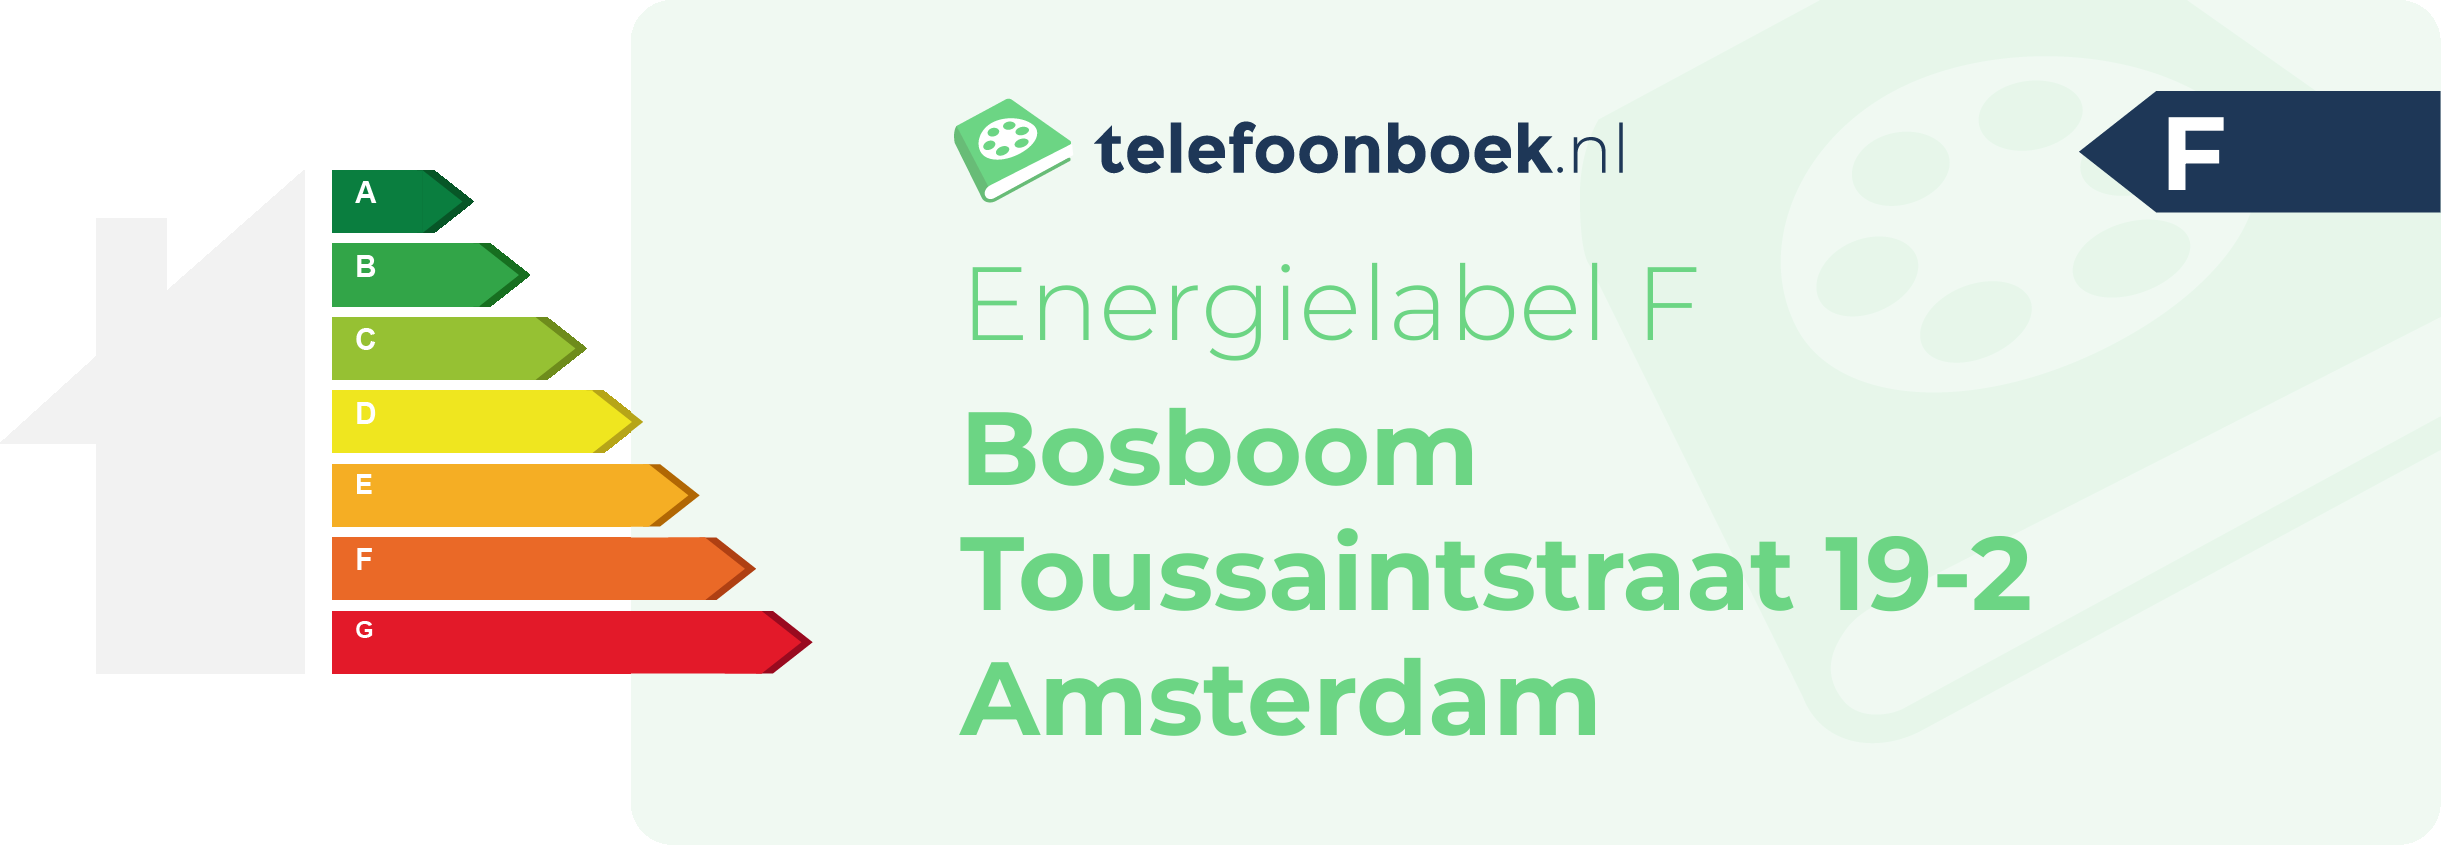 Energielabel Bosboom Toussaintstraat 19-2 Amsterdam